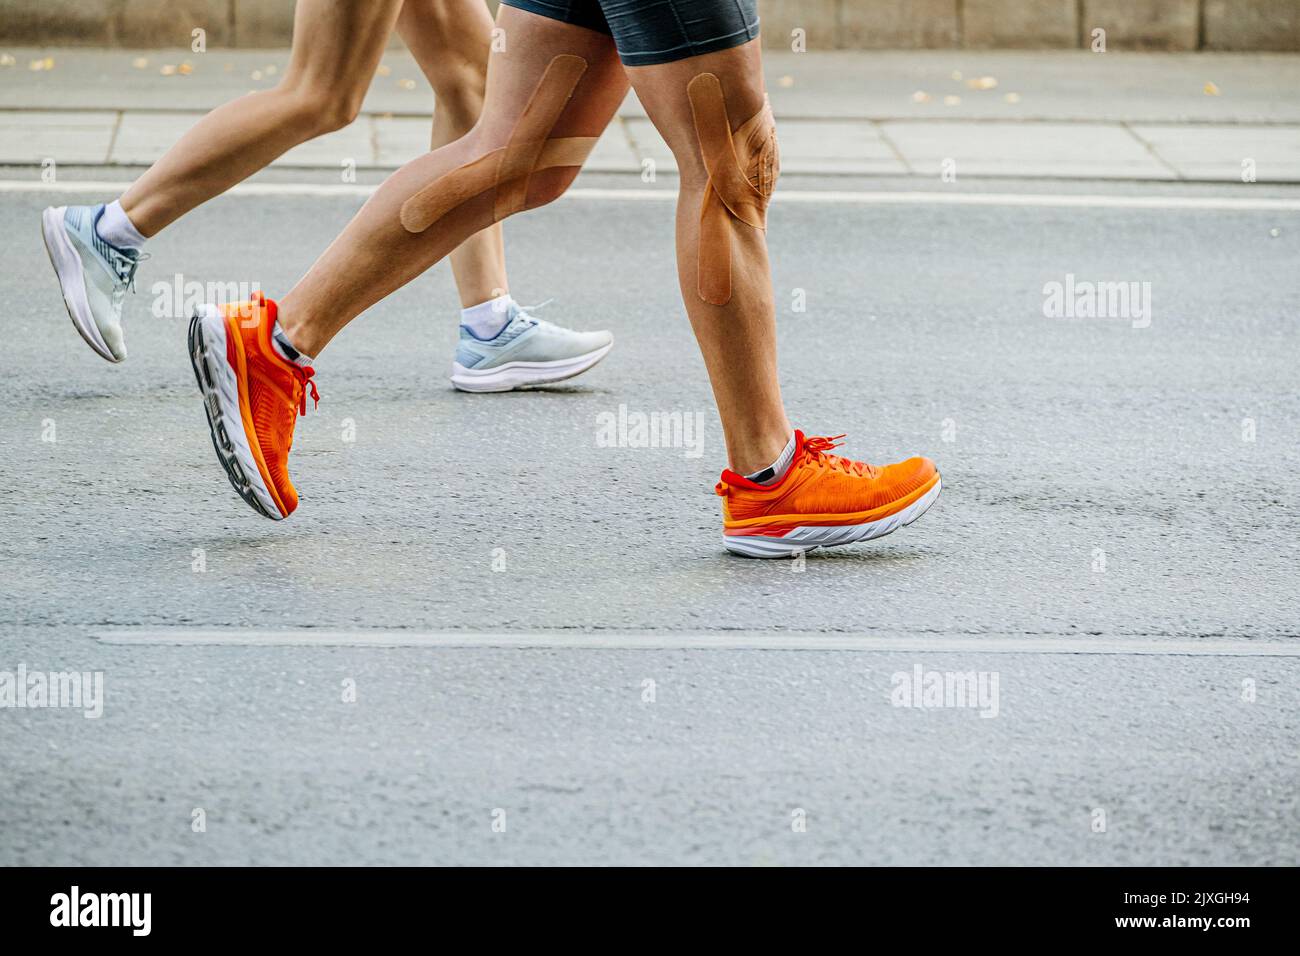 legs runners man and woman run on road marathon Stock Photo